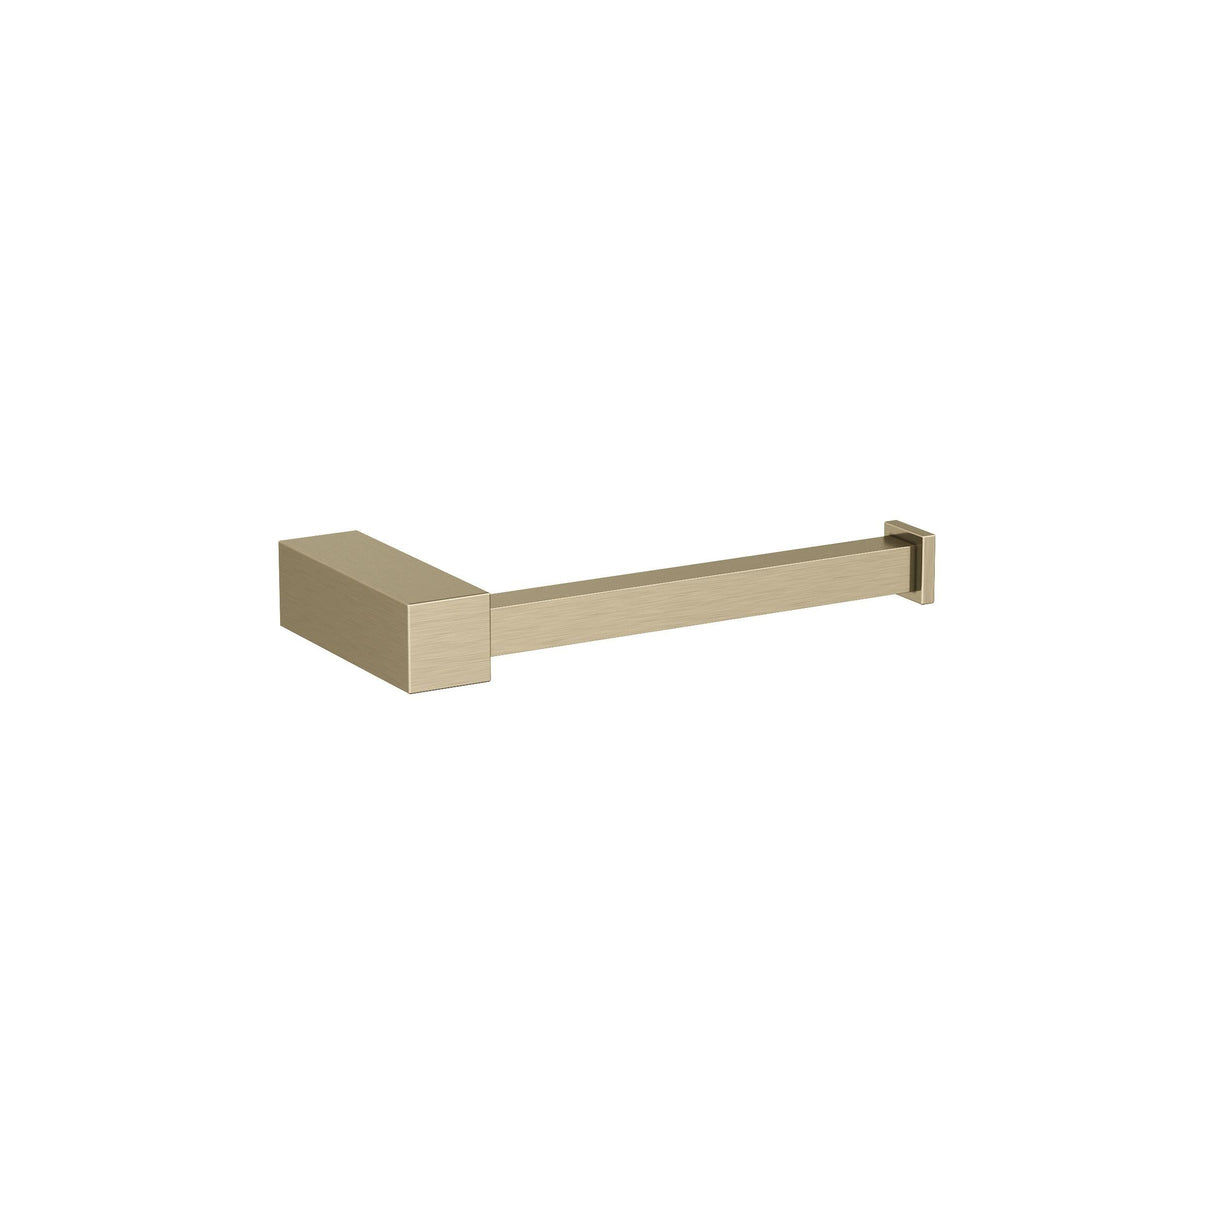 Amerock BH36081BBZ Golden Champagne Single Post Toilet Paper Holder 5-7/8 in. (149 mm) Length Toilet Tissue Holder Monument Bath Tissue Holder Bathroom Hardware Bath Accessories